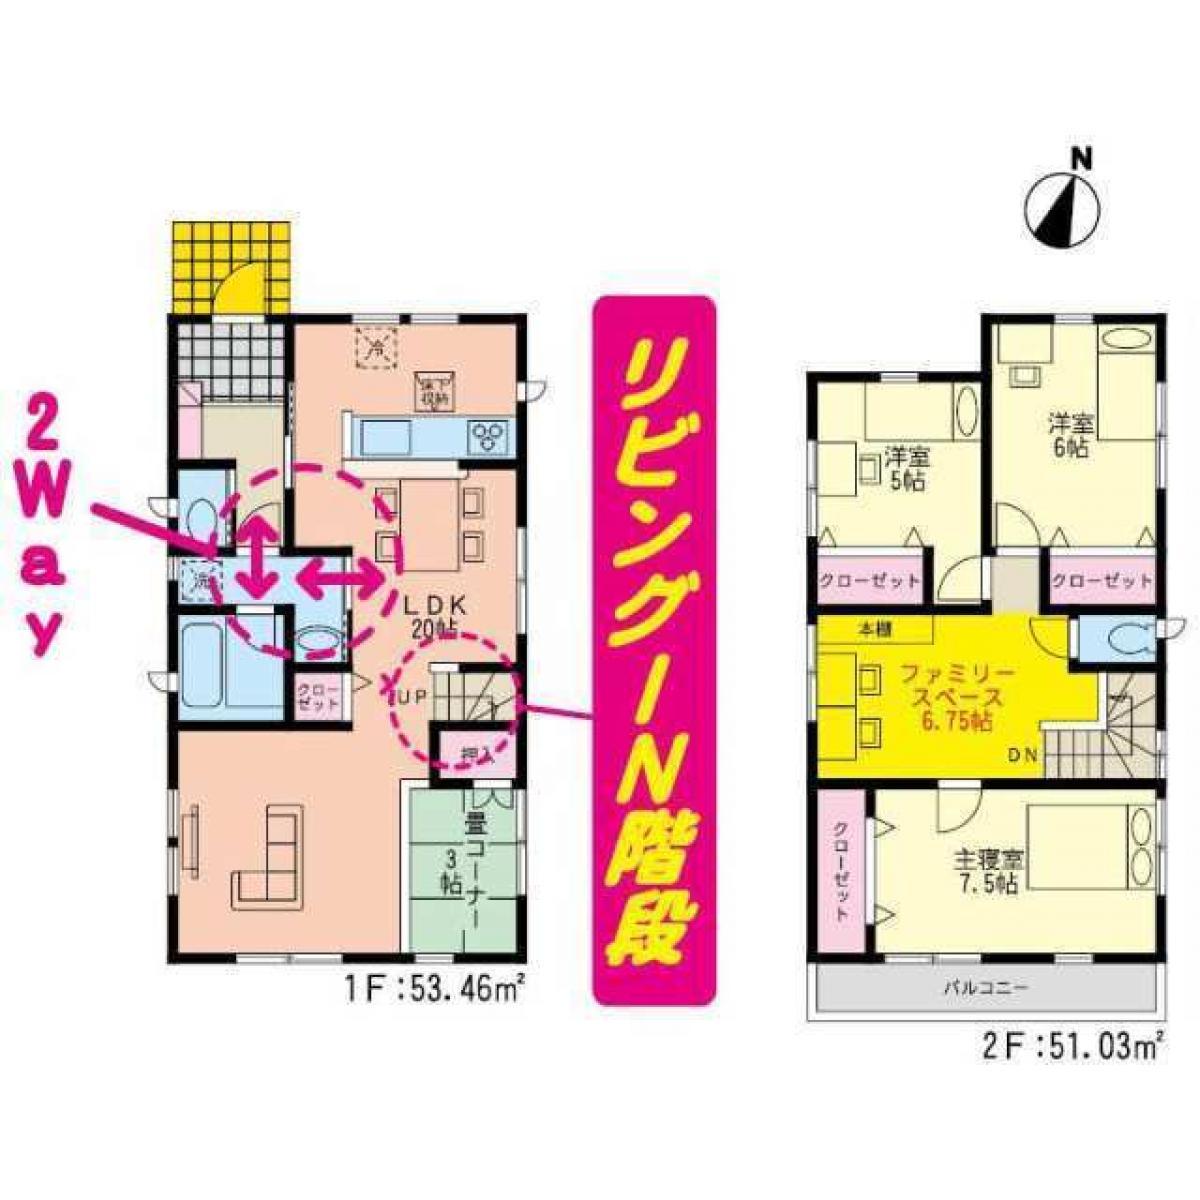 Picture of Home For Sale in Fukuoka Shi Minami Ku, Fukuoka, Japan